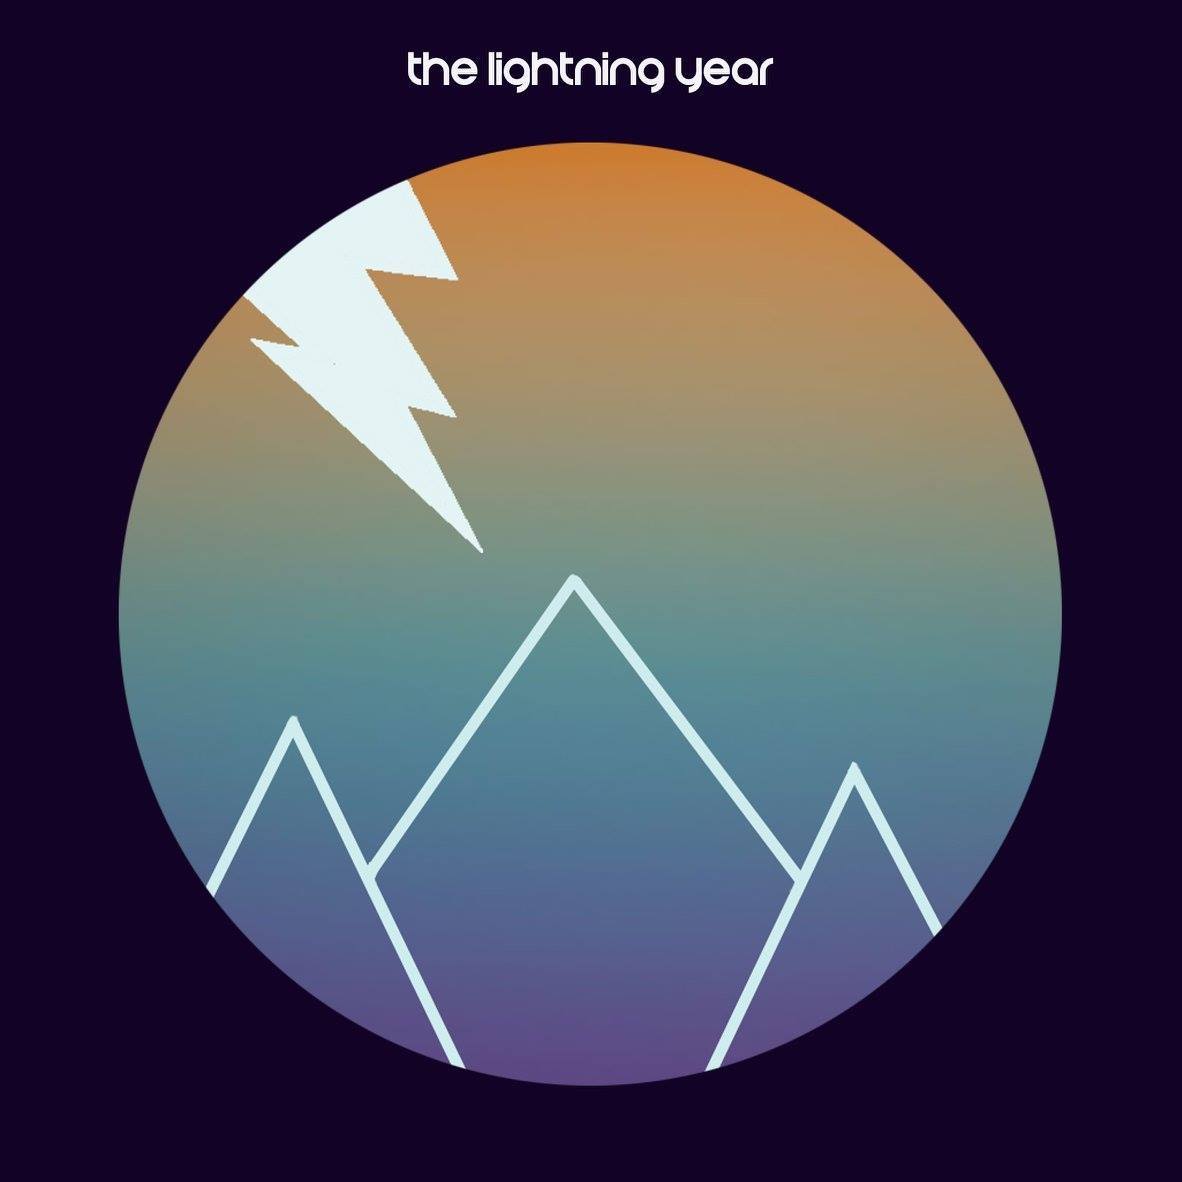 The Lightning Year – “Endless Memory”